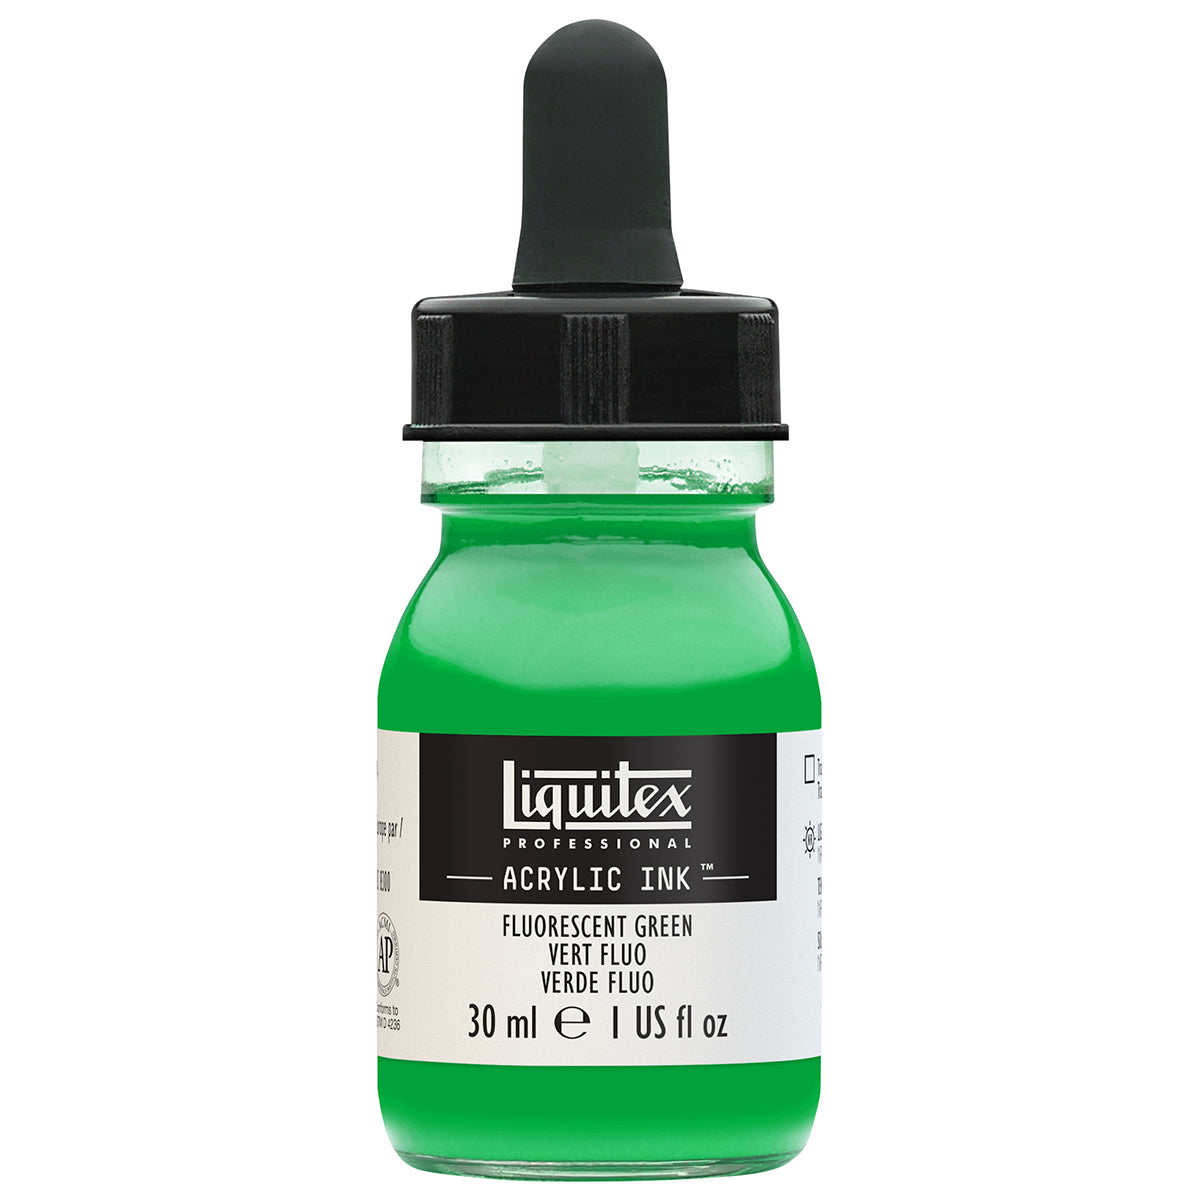 Liquitex - Acrylic Ink - 30ml Fluorescent Green